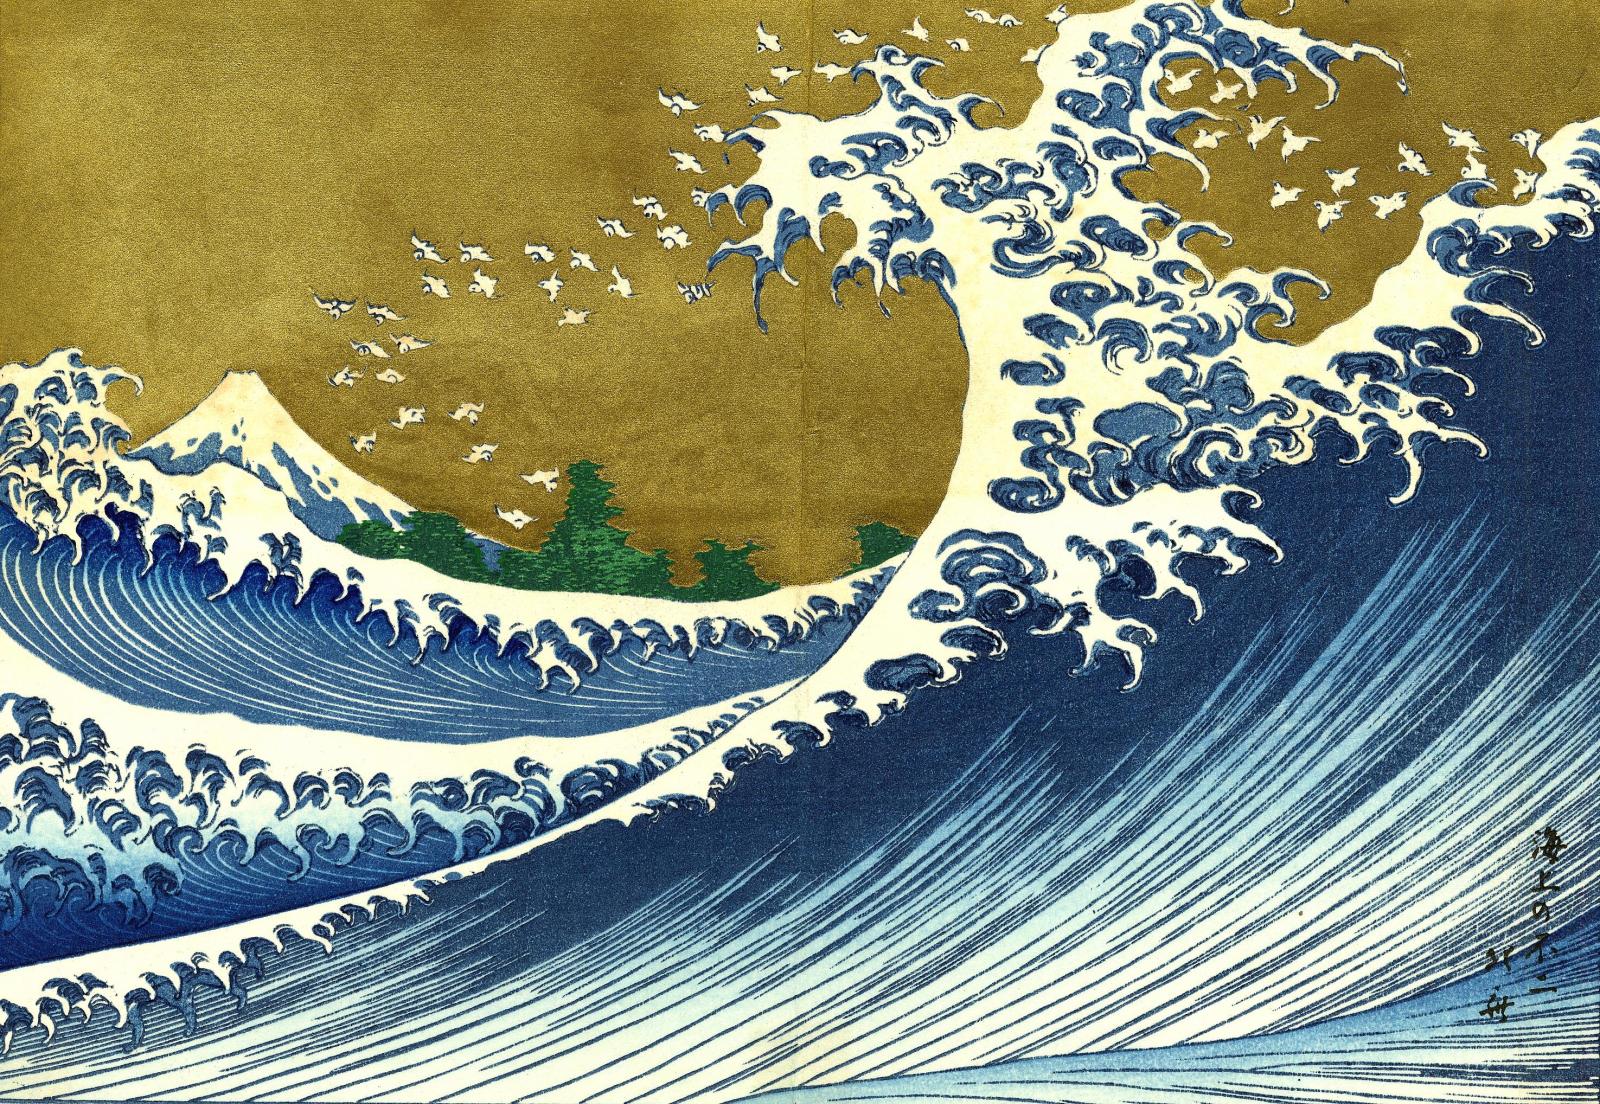 hokusai-wave-2.jpg